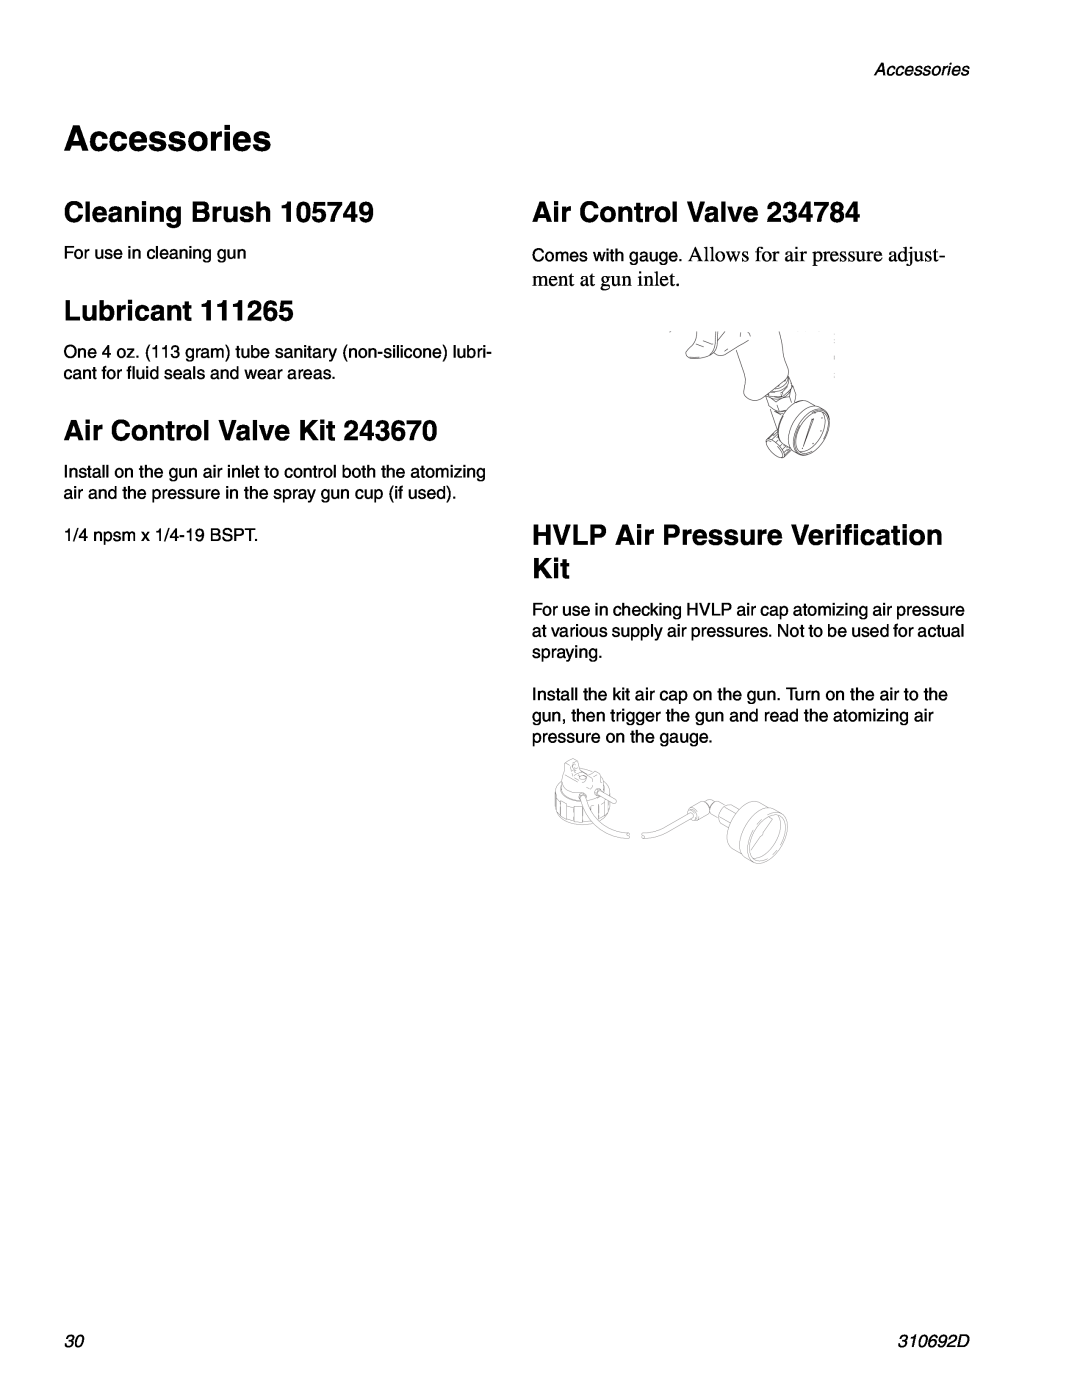 Graco 310692D Accessories, Cleaning Brush, Lubricant, Air Control Valve Kit, HVLP Air Pressure Verification Kit 